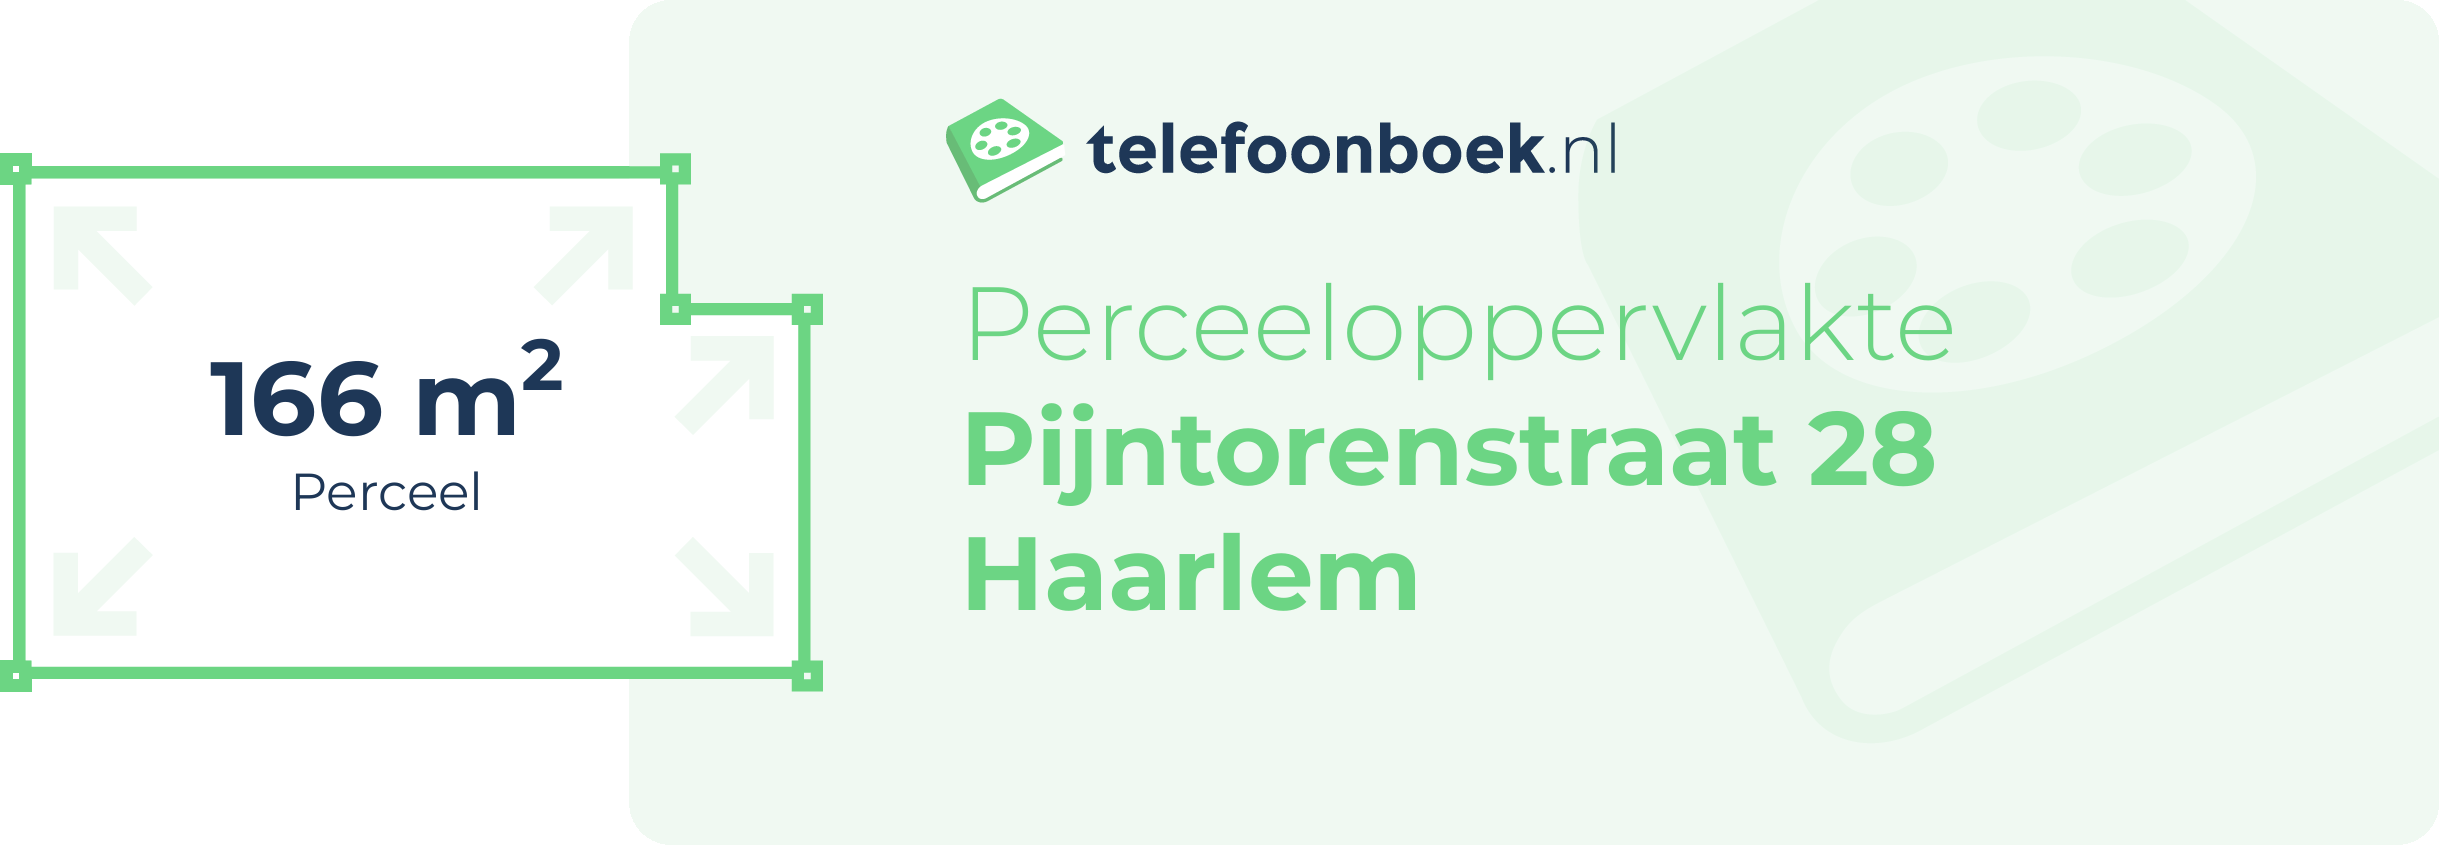 Perceeloppervlakte Pijntorenstraat 28 Haarlem